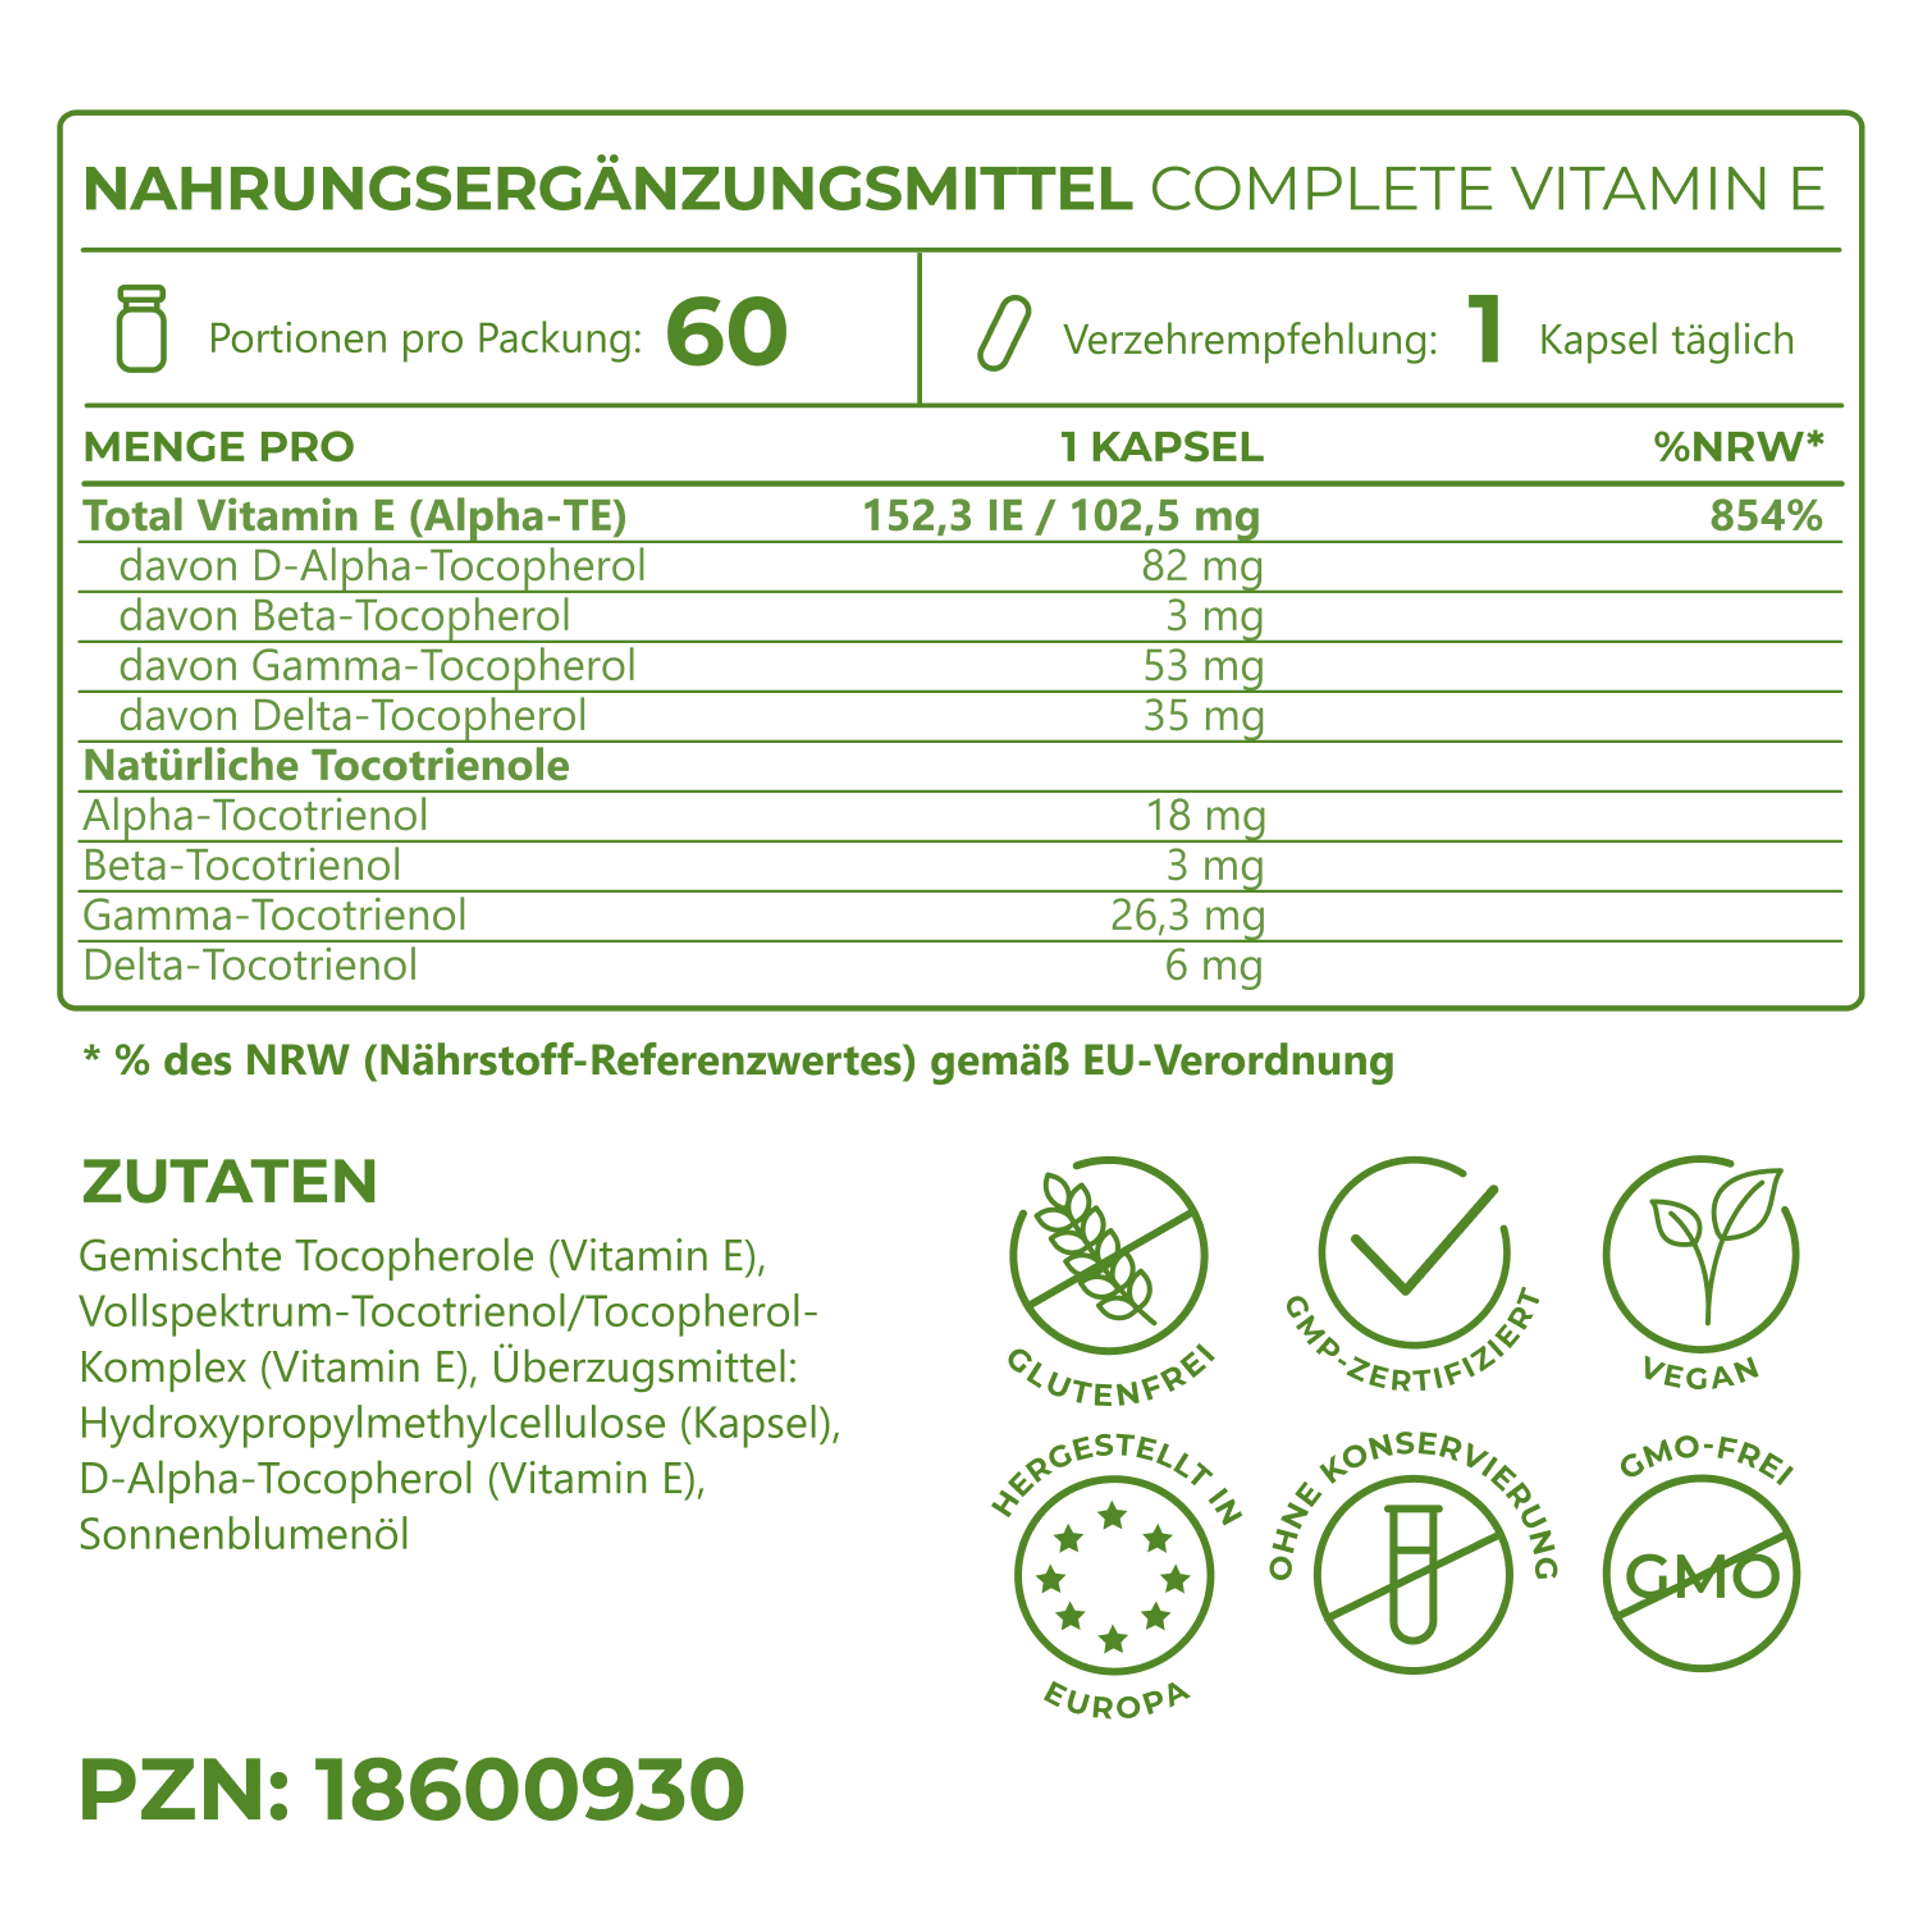 5_DE_Ingredients_Complete Vitamin E_6891-11.png